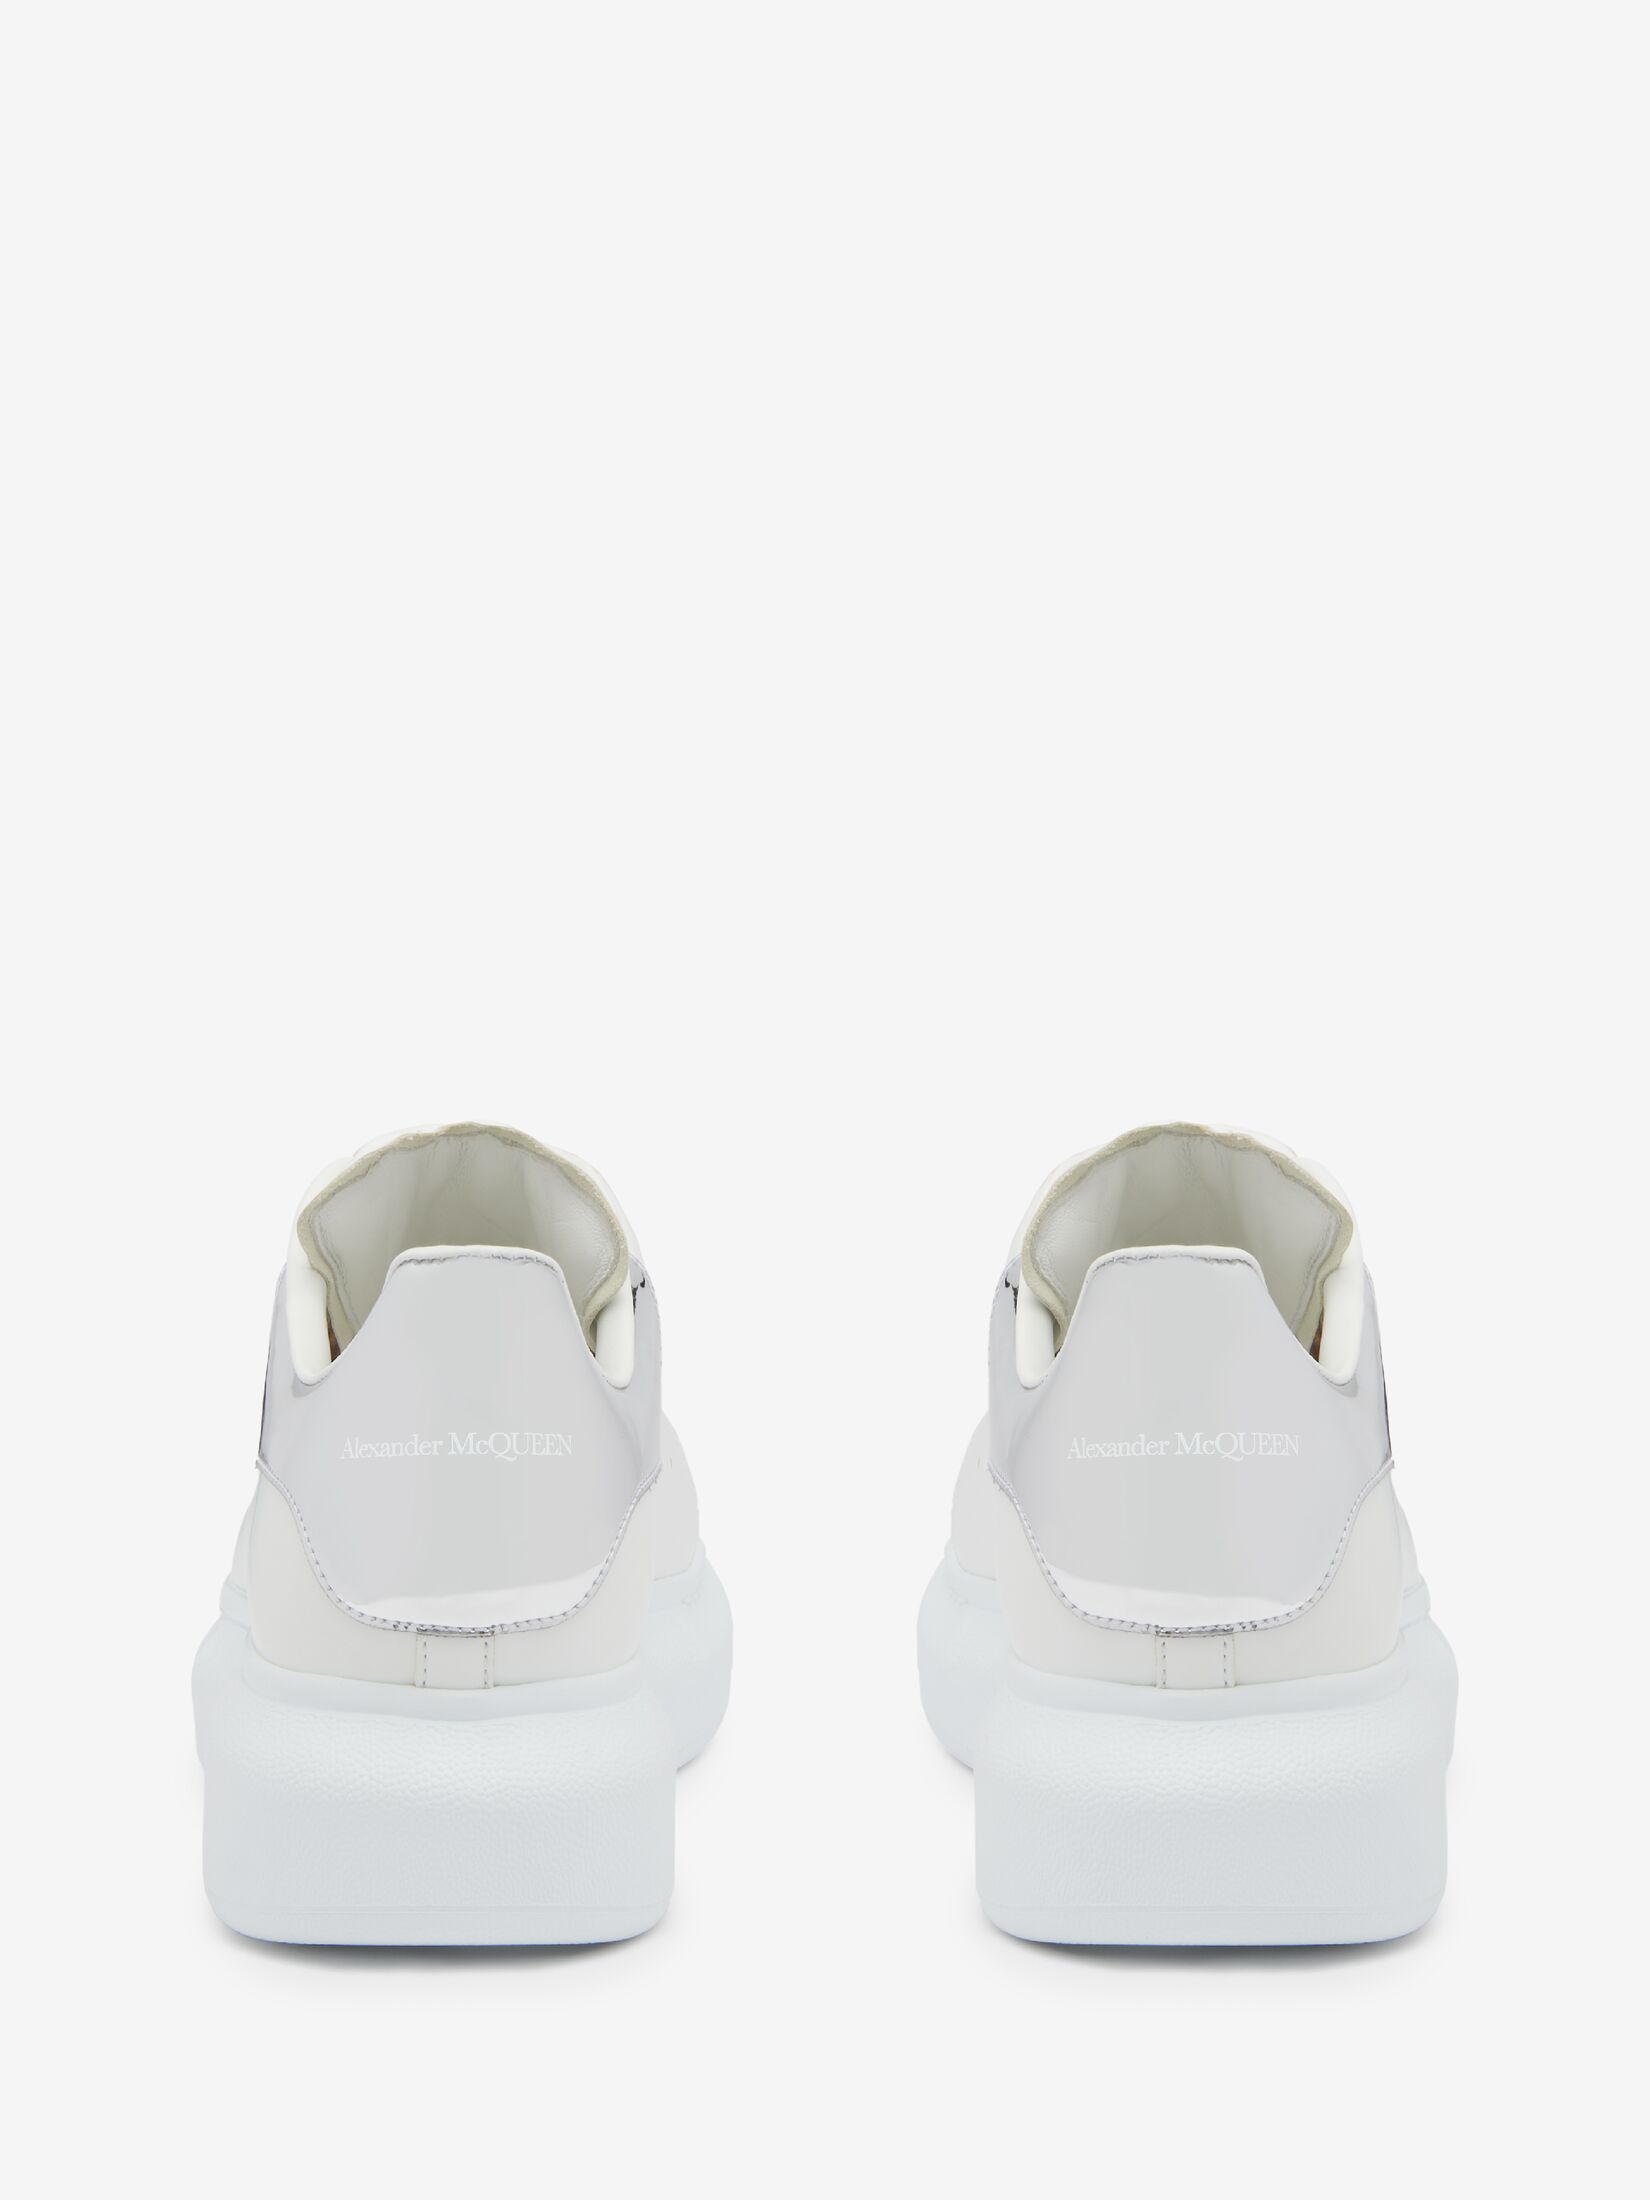 Oversized Sneaker in White/Silver | Alexander McQueen US